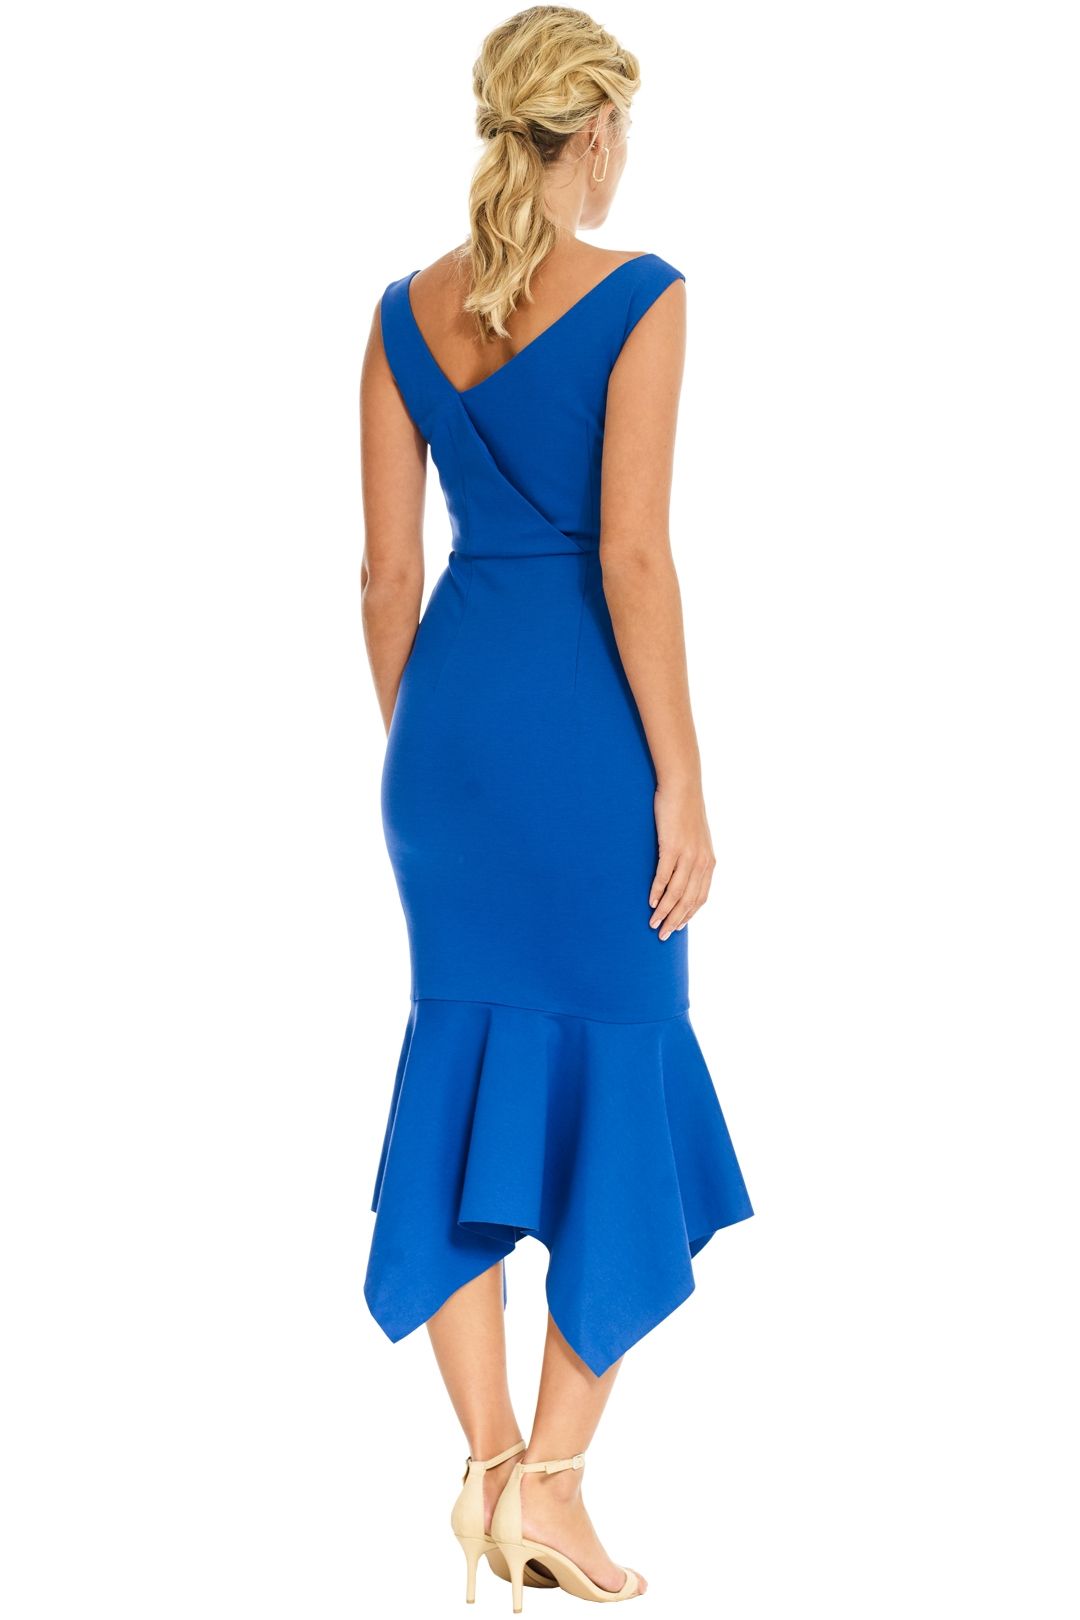 Elliatt - Viola Dress - Cobalt Blue - Back